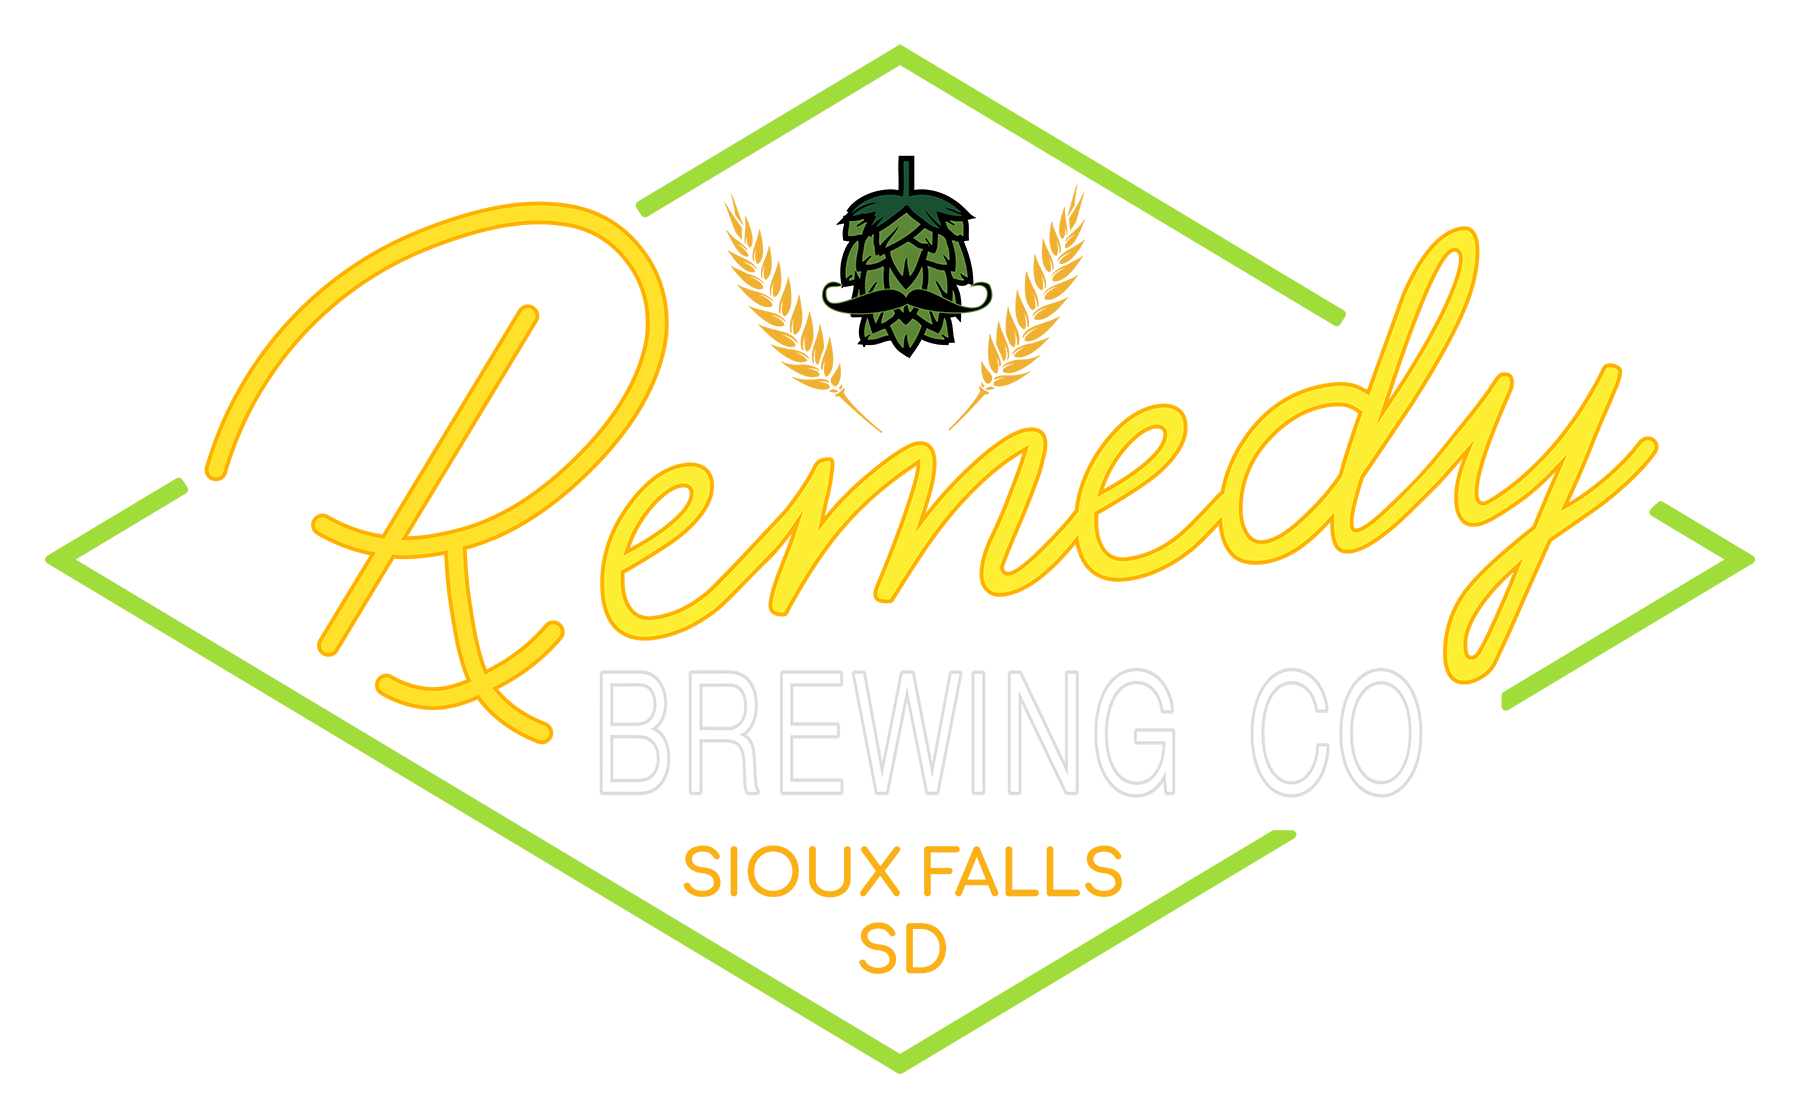 Remedy Brewing Company